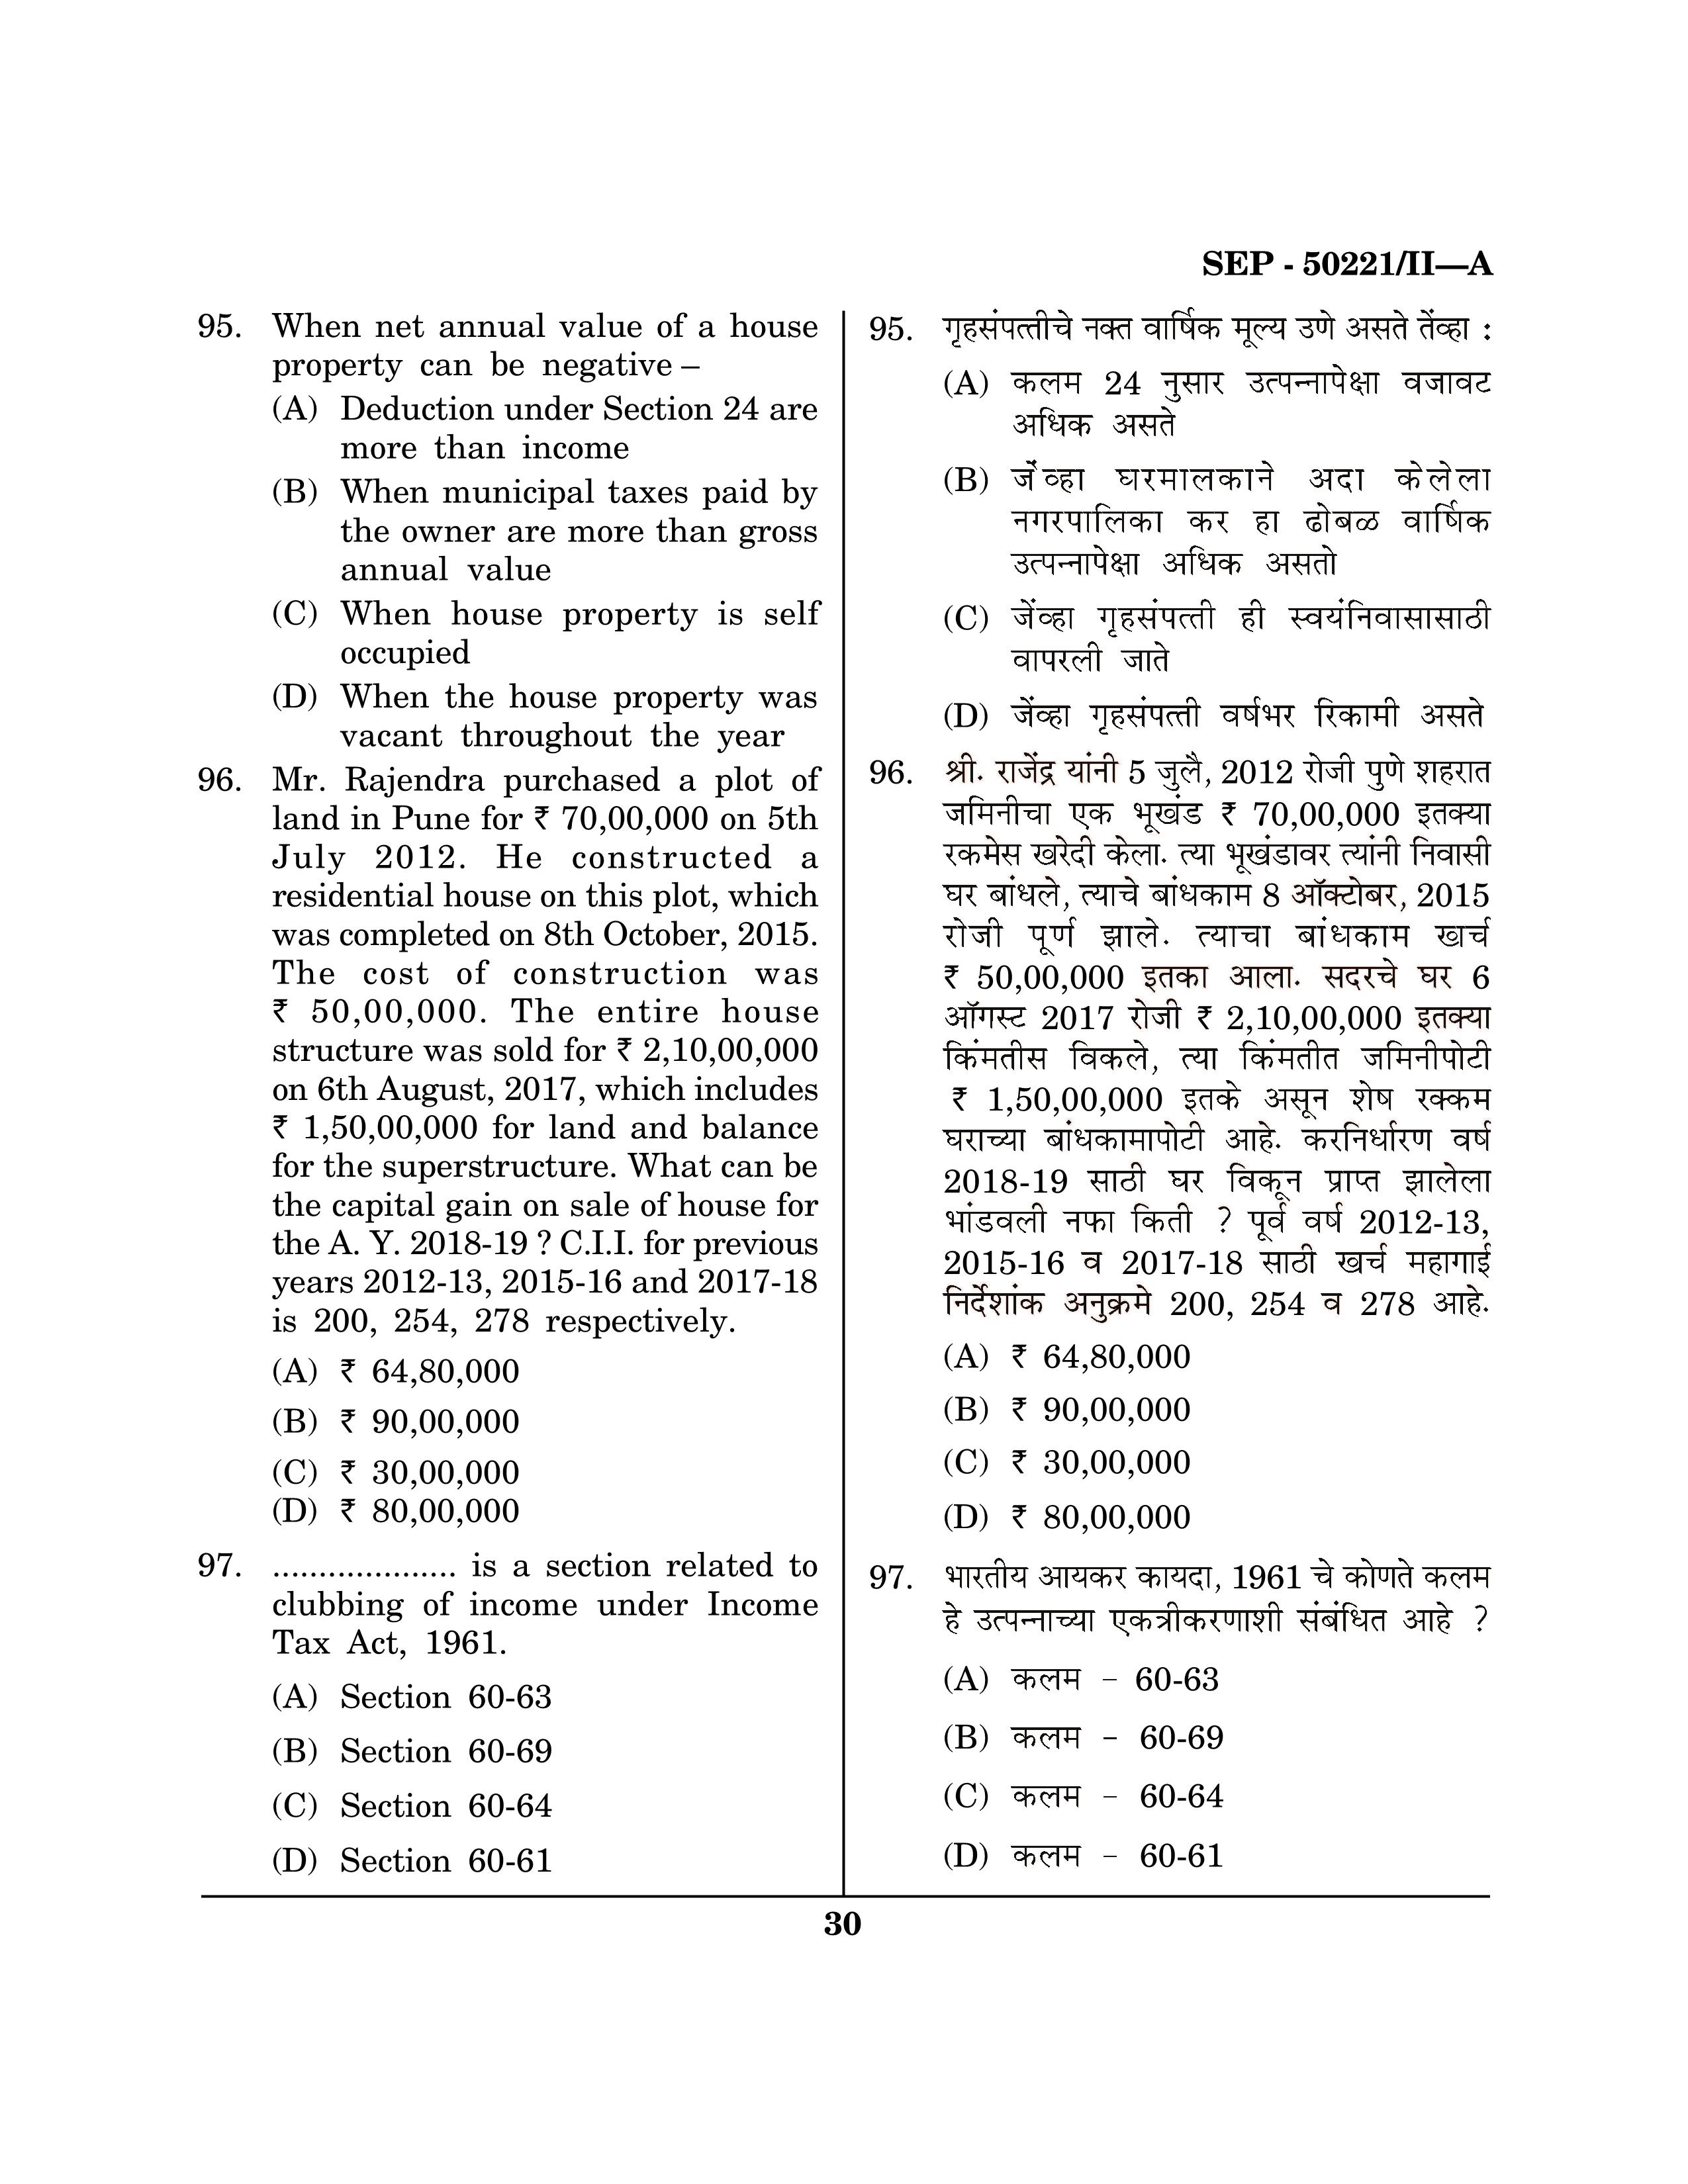 Maharashtra SET Commerce Exam Question Paper September 2021 29